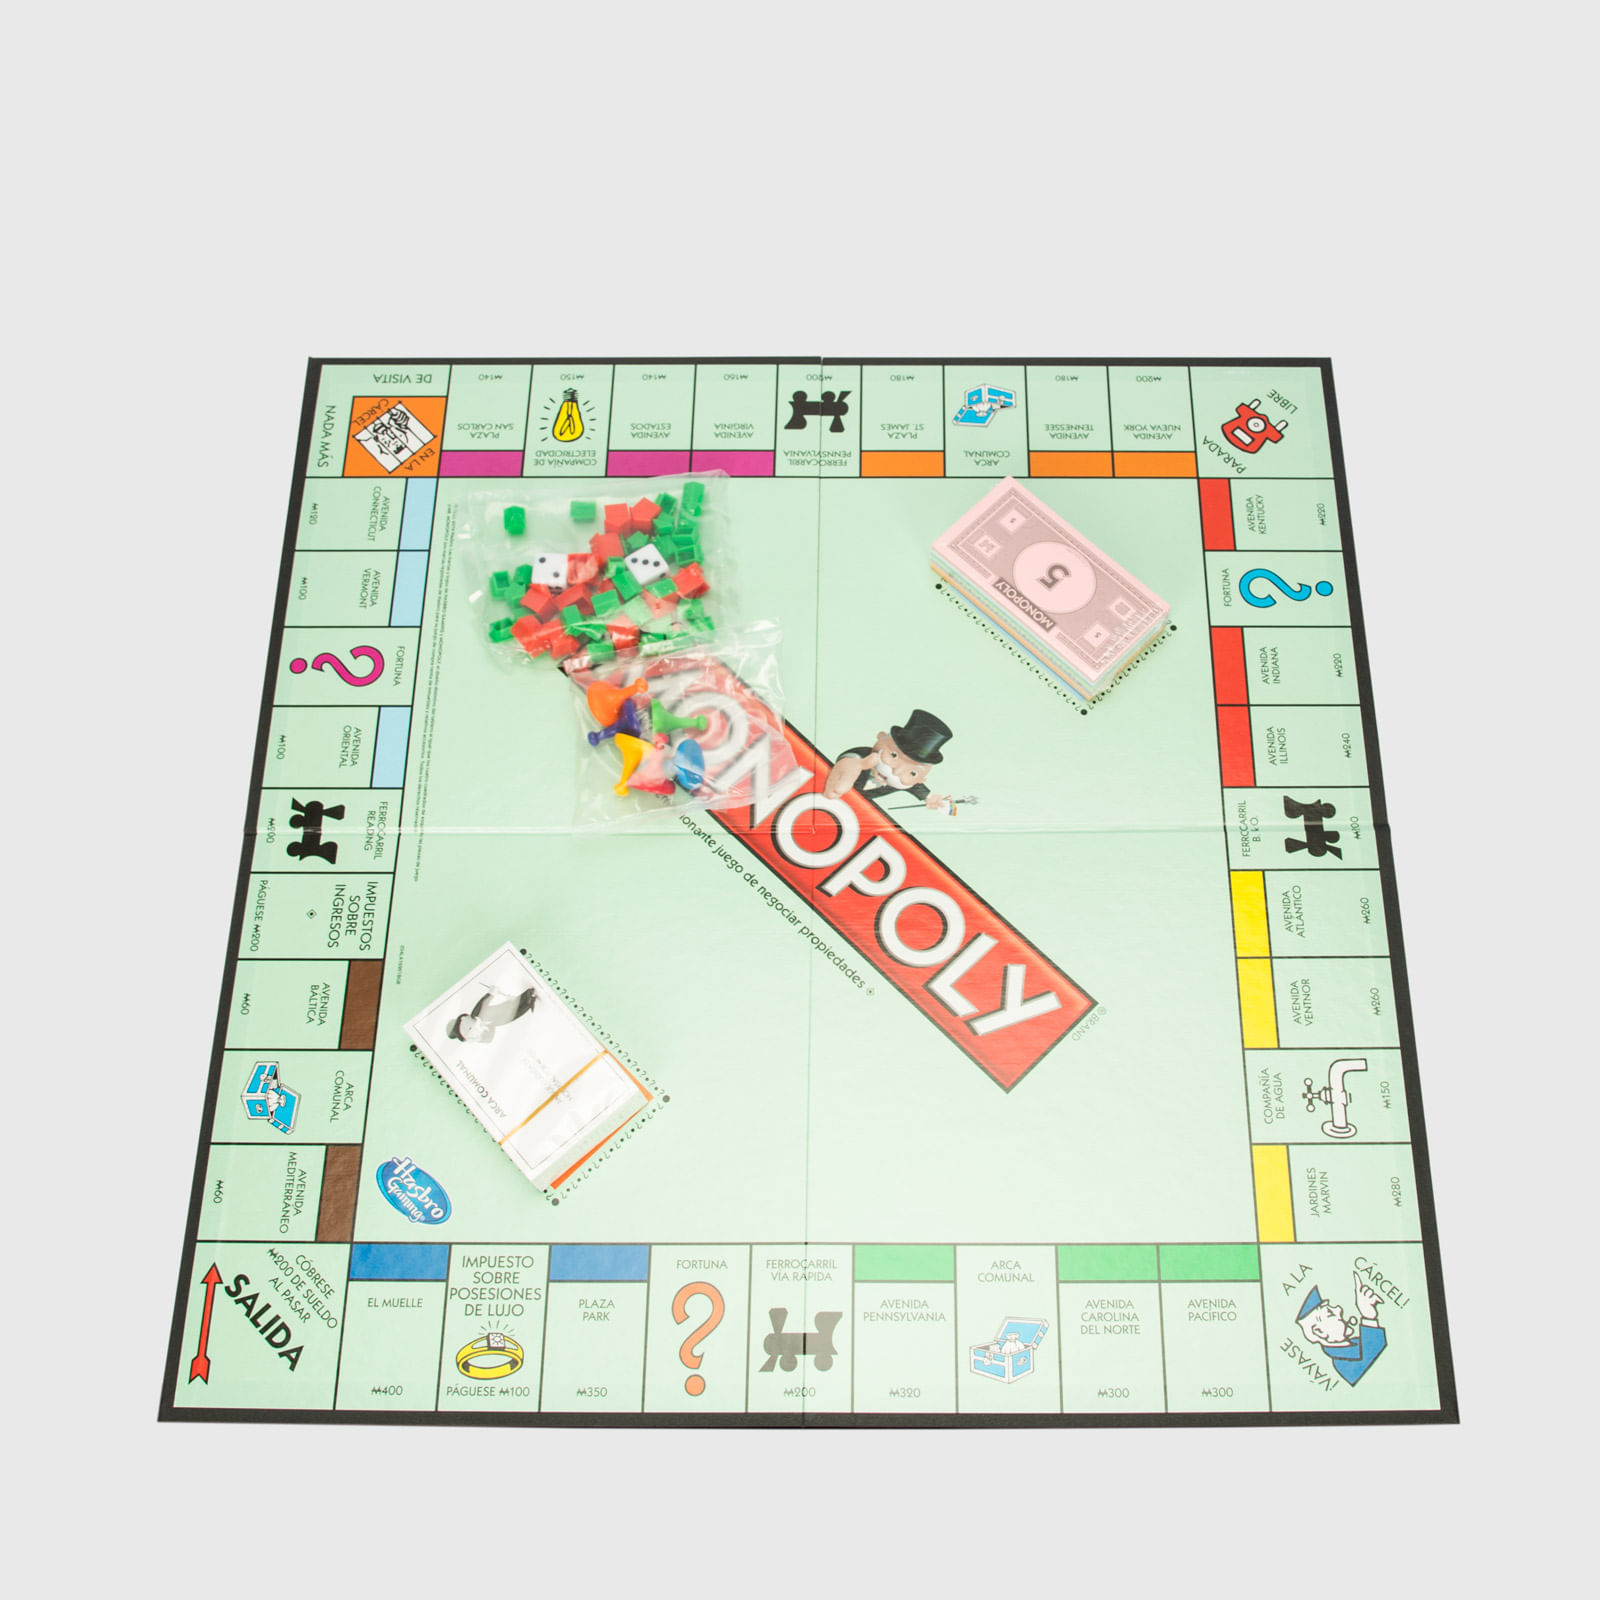 Juego Monopolio modular español